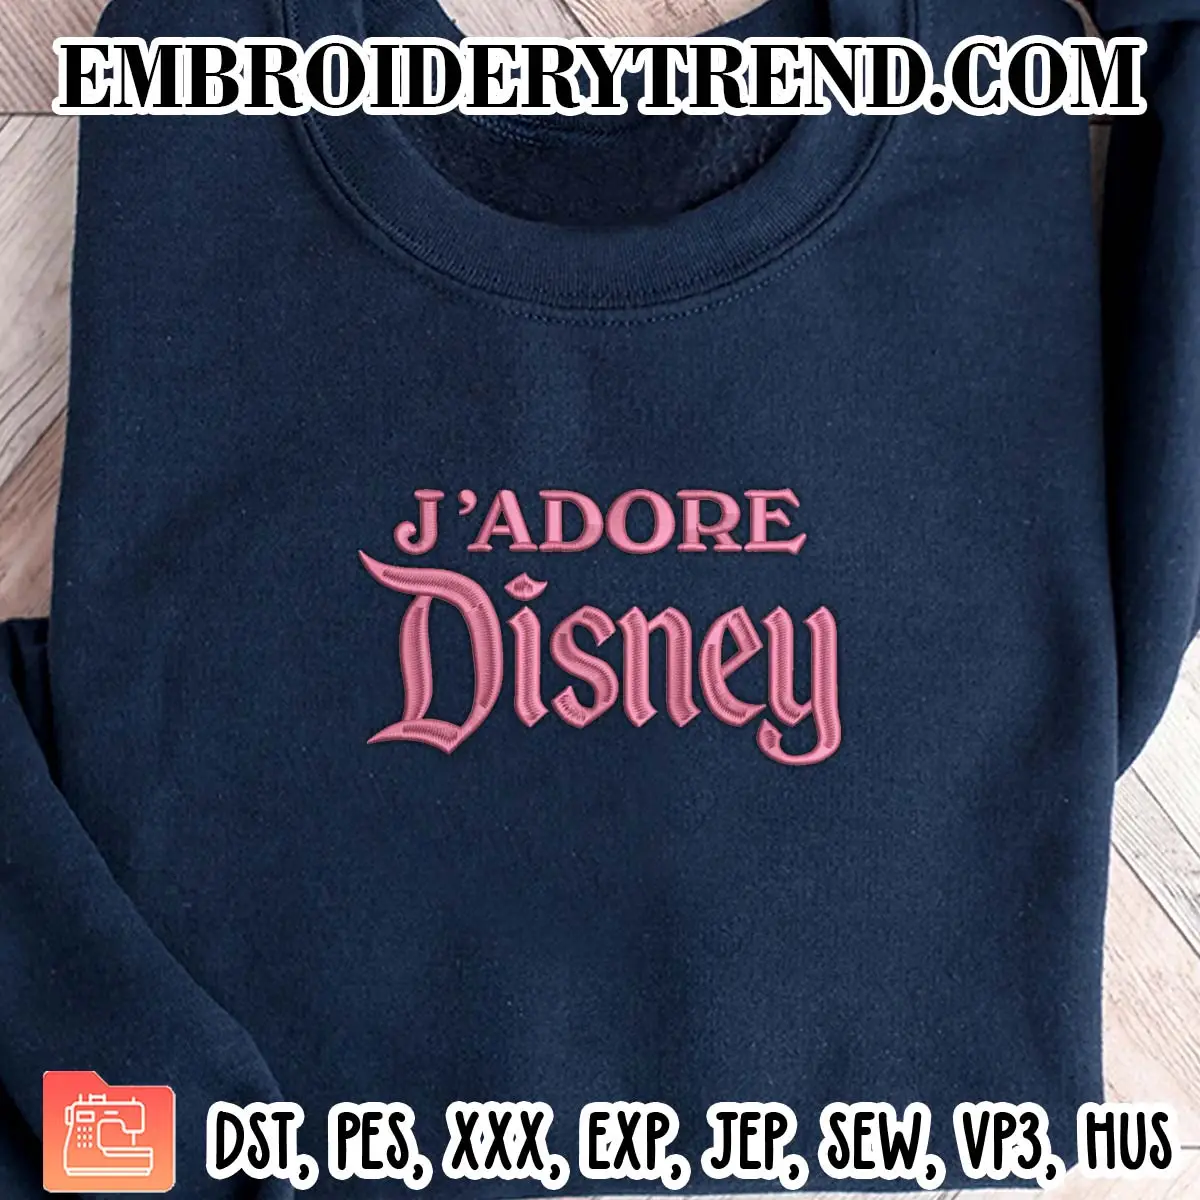 Jadore Disney Embroidery Design, Disneyworld Paris Machine Embroidery Digitized Pes Files